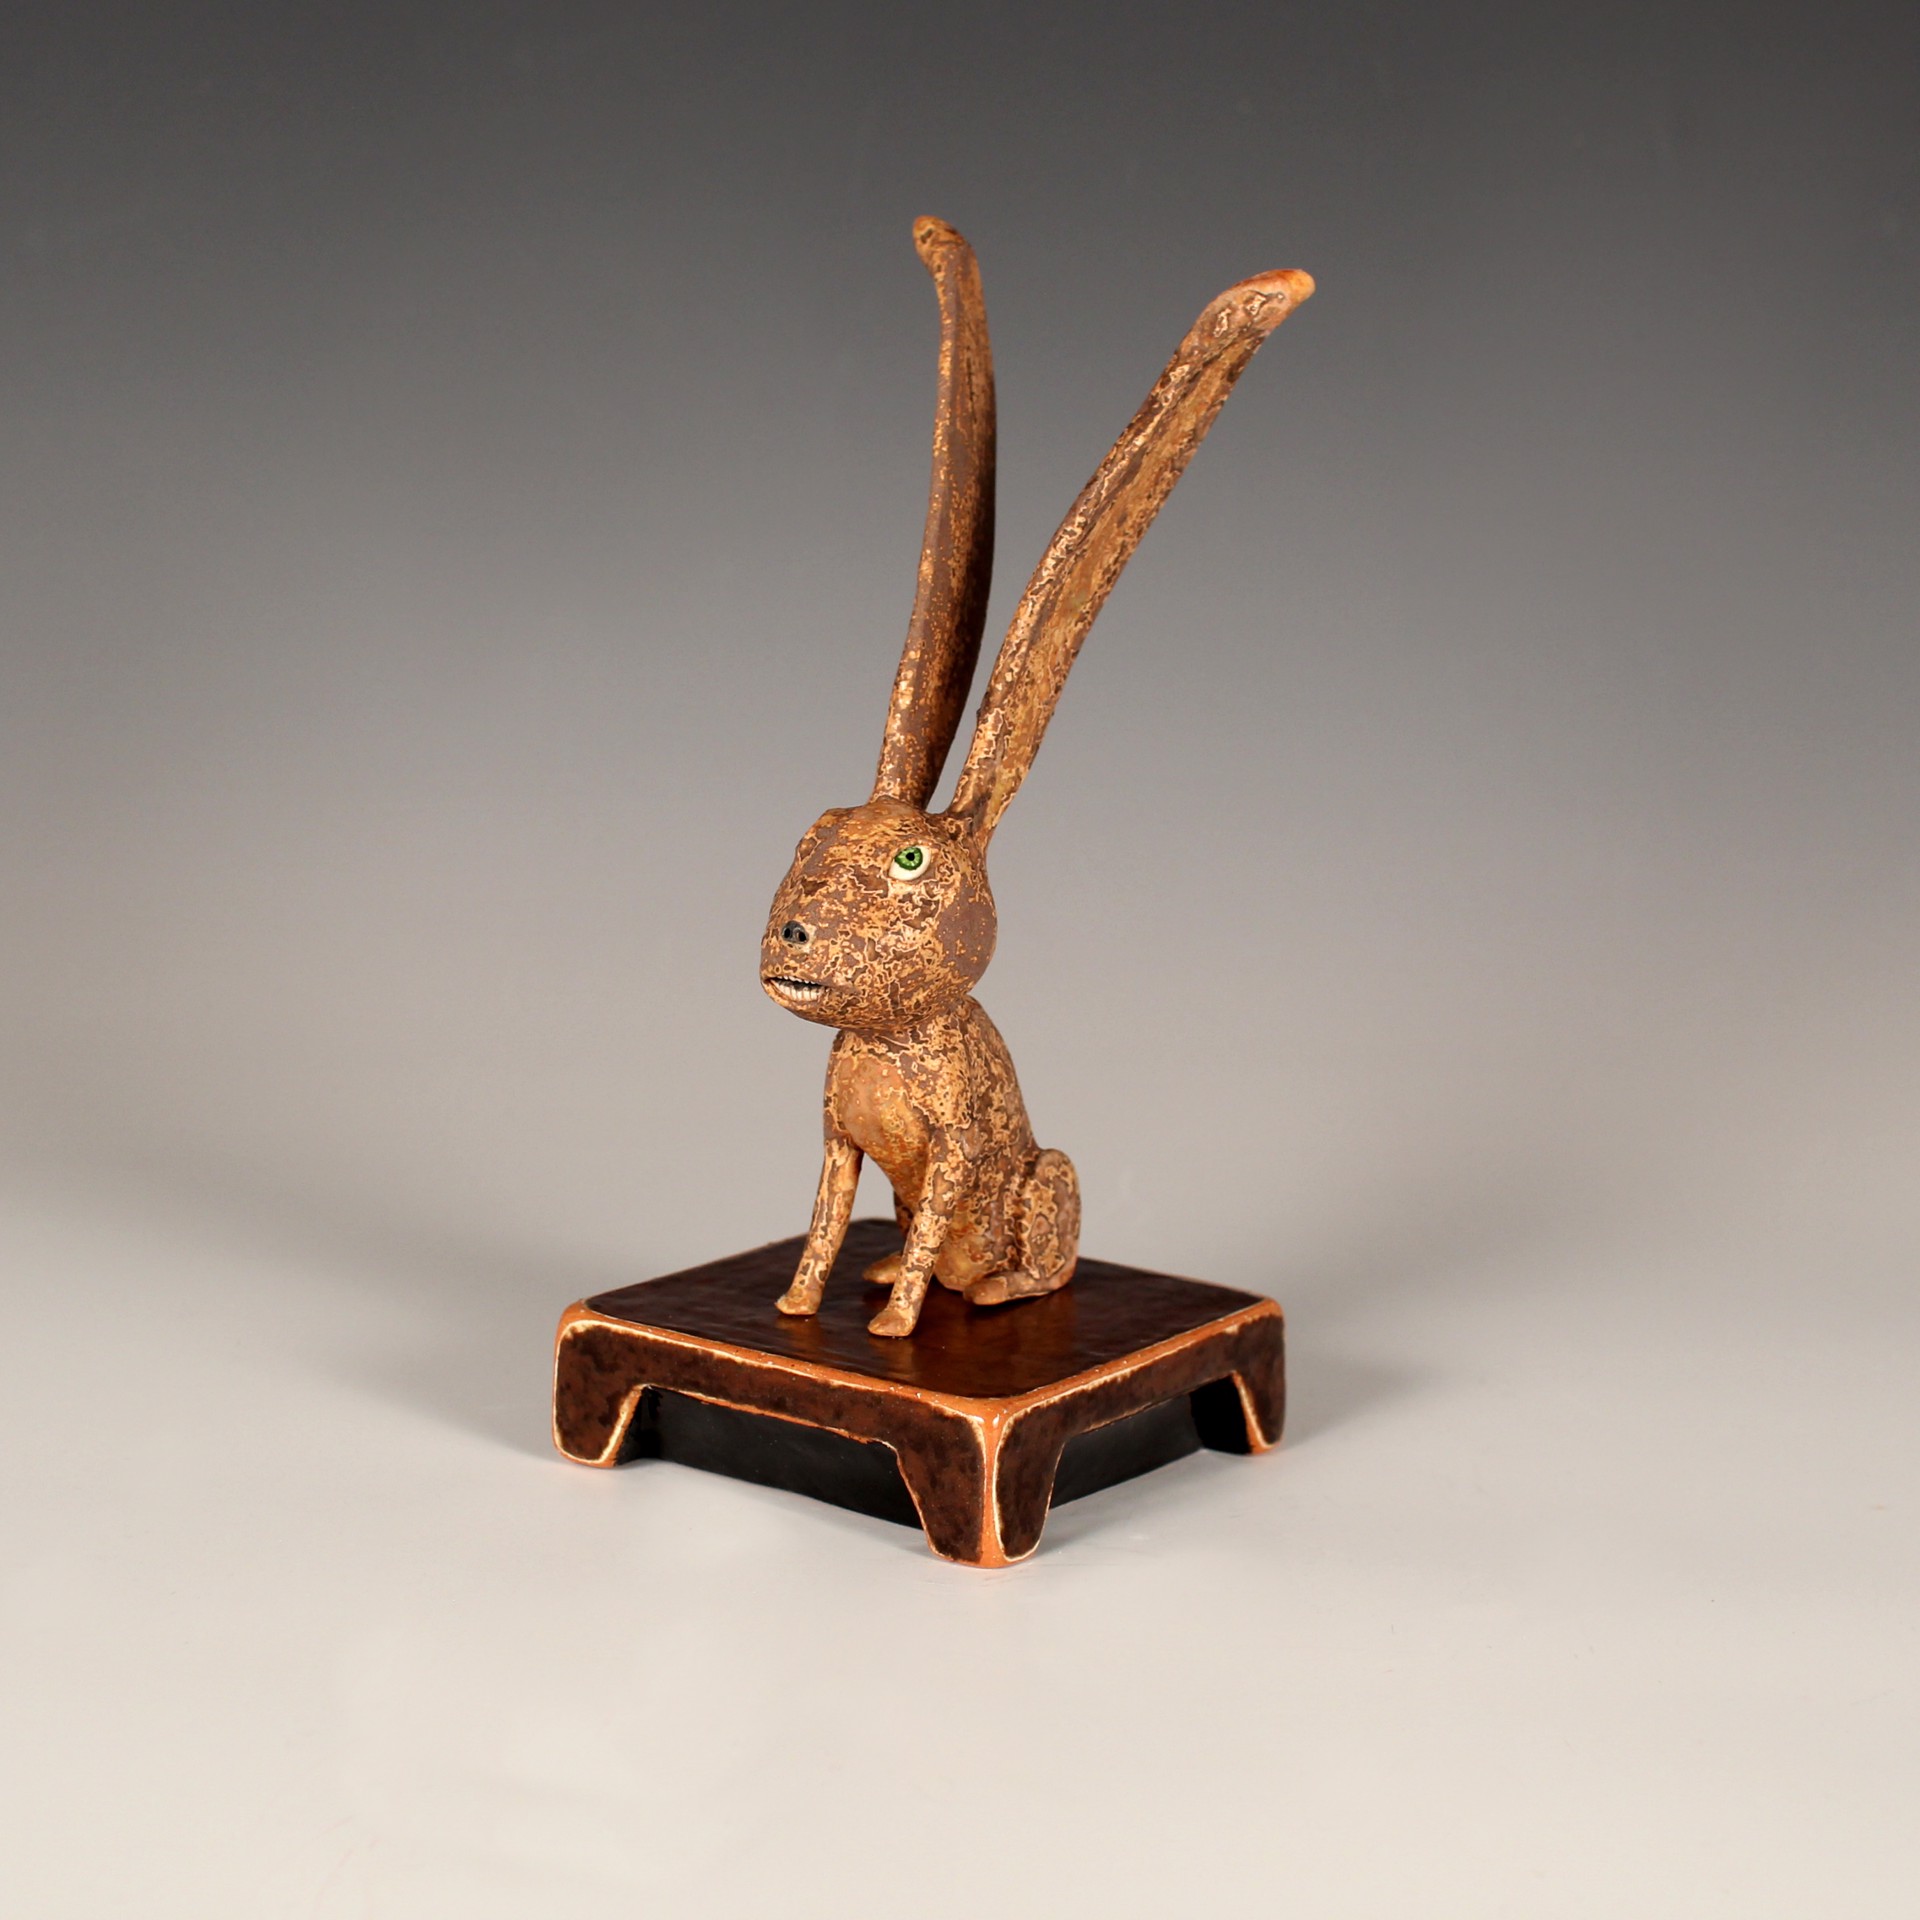 Tan Rabbit by Wesley Anderegg